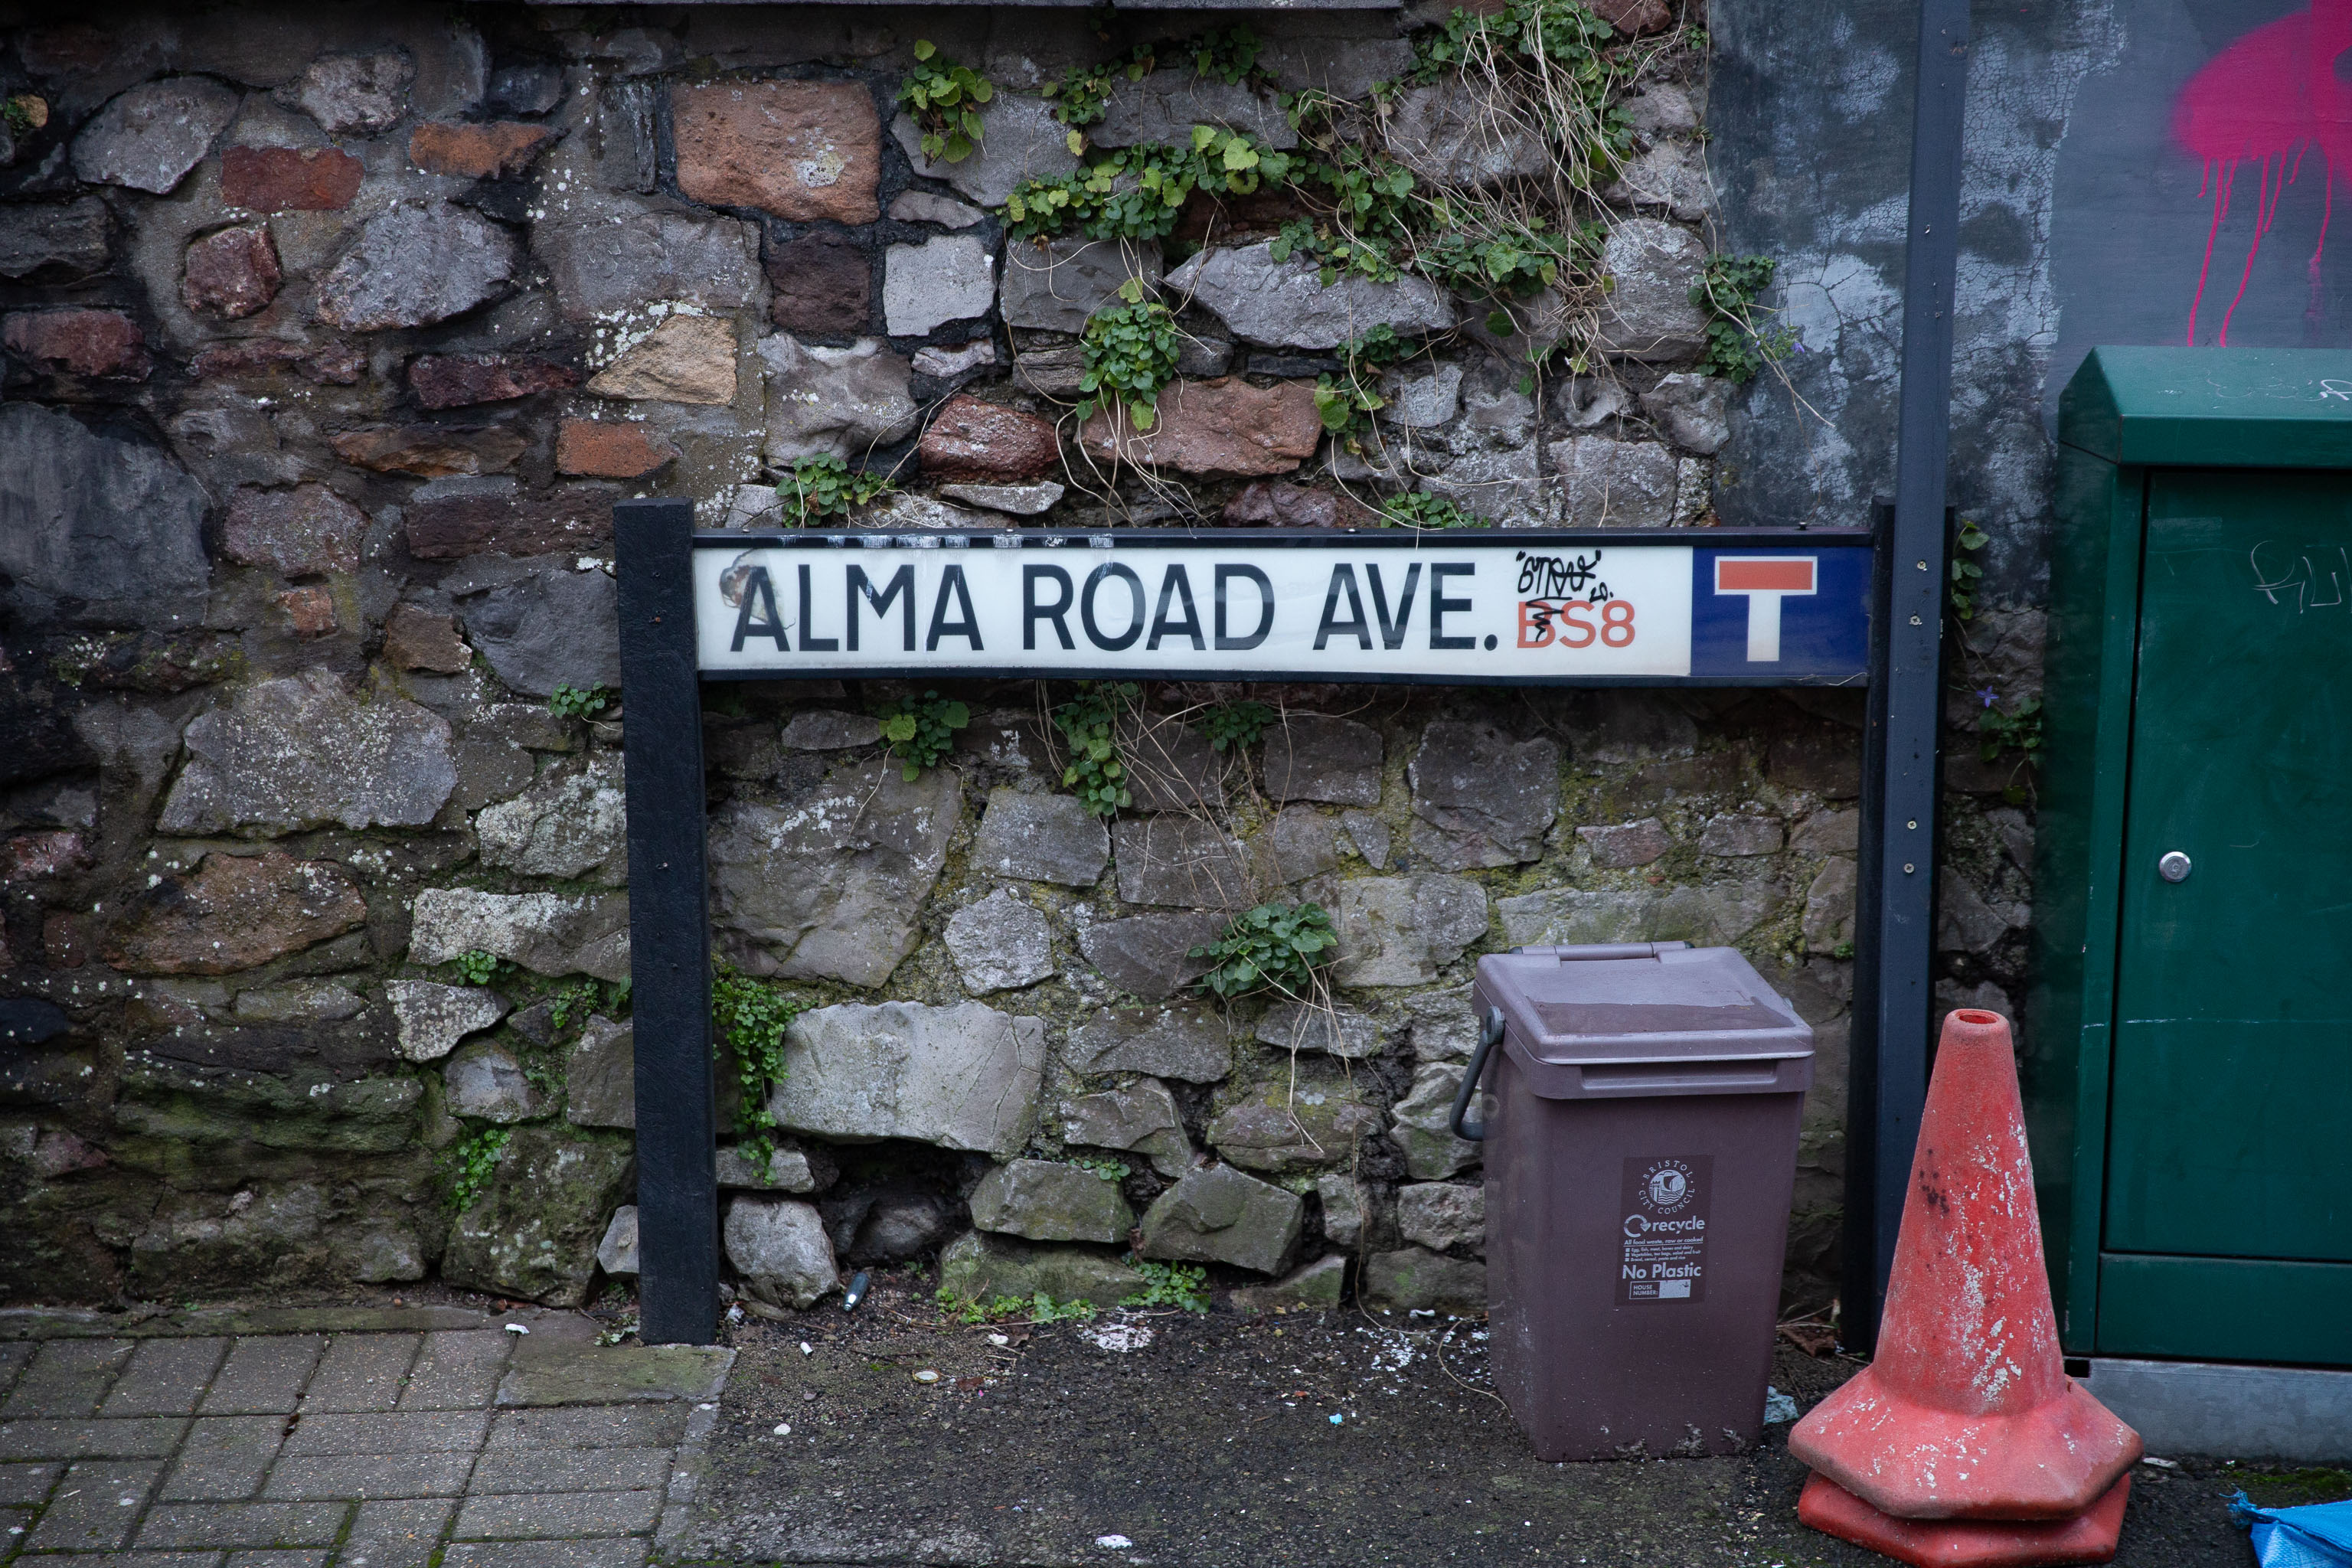 Alma Road Ave.
As opposed to Alma Rd Avenue, I presume.
